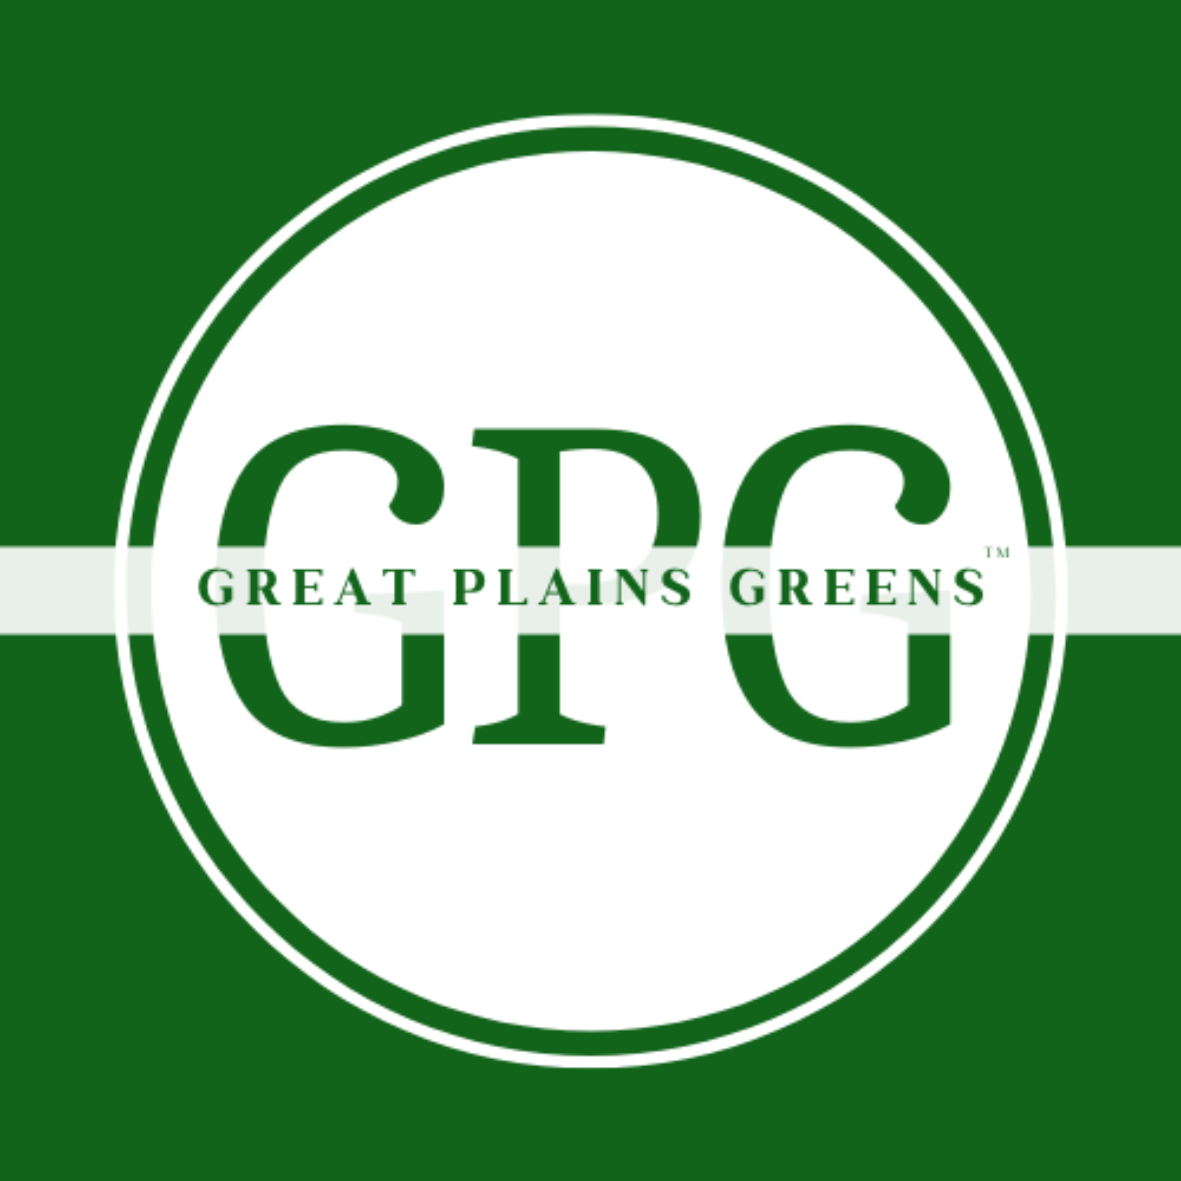 Great Plains Greens